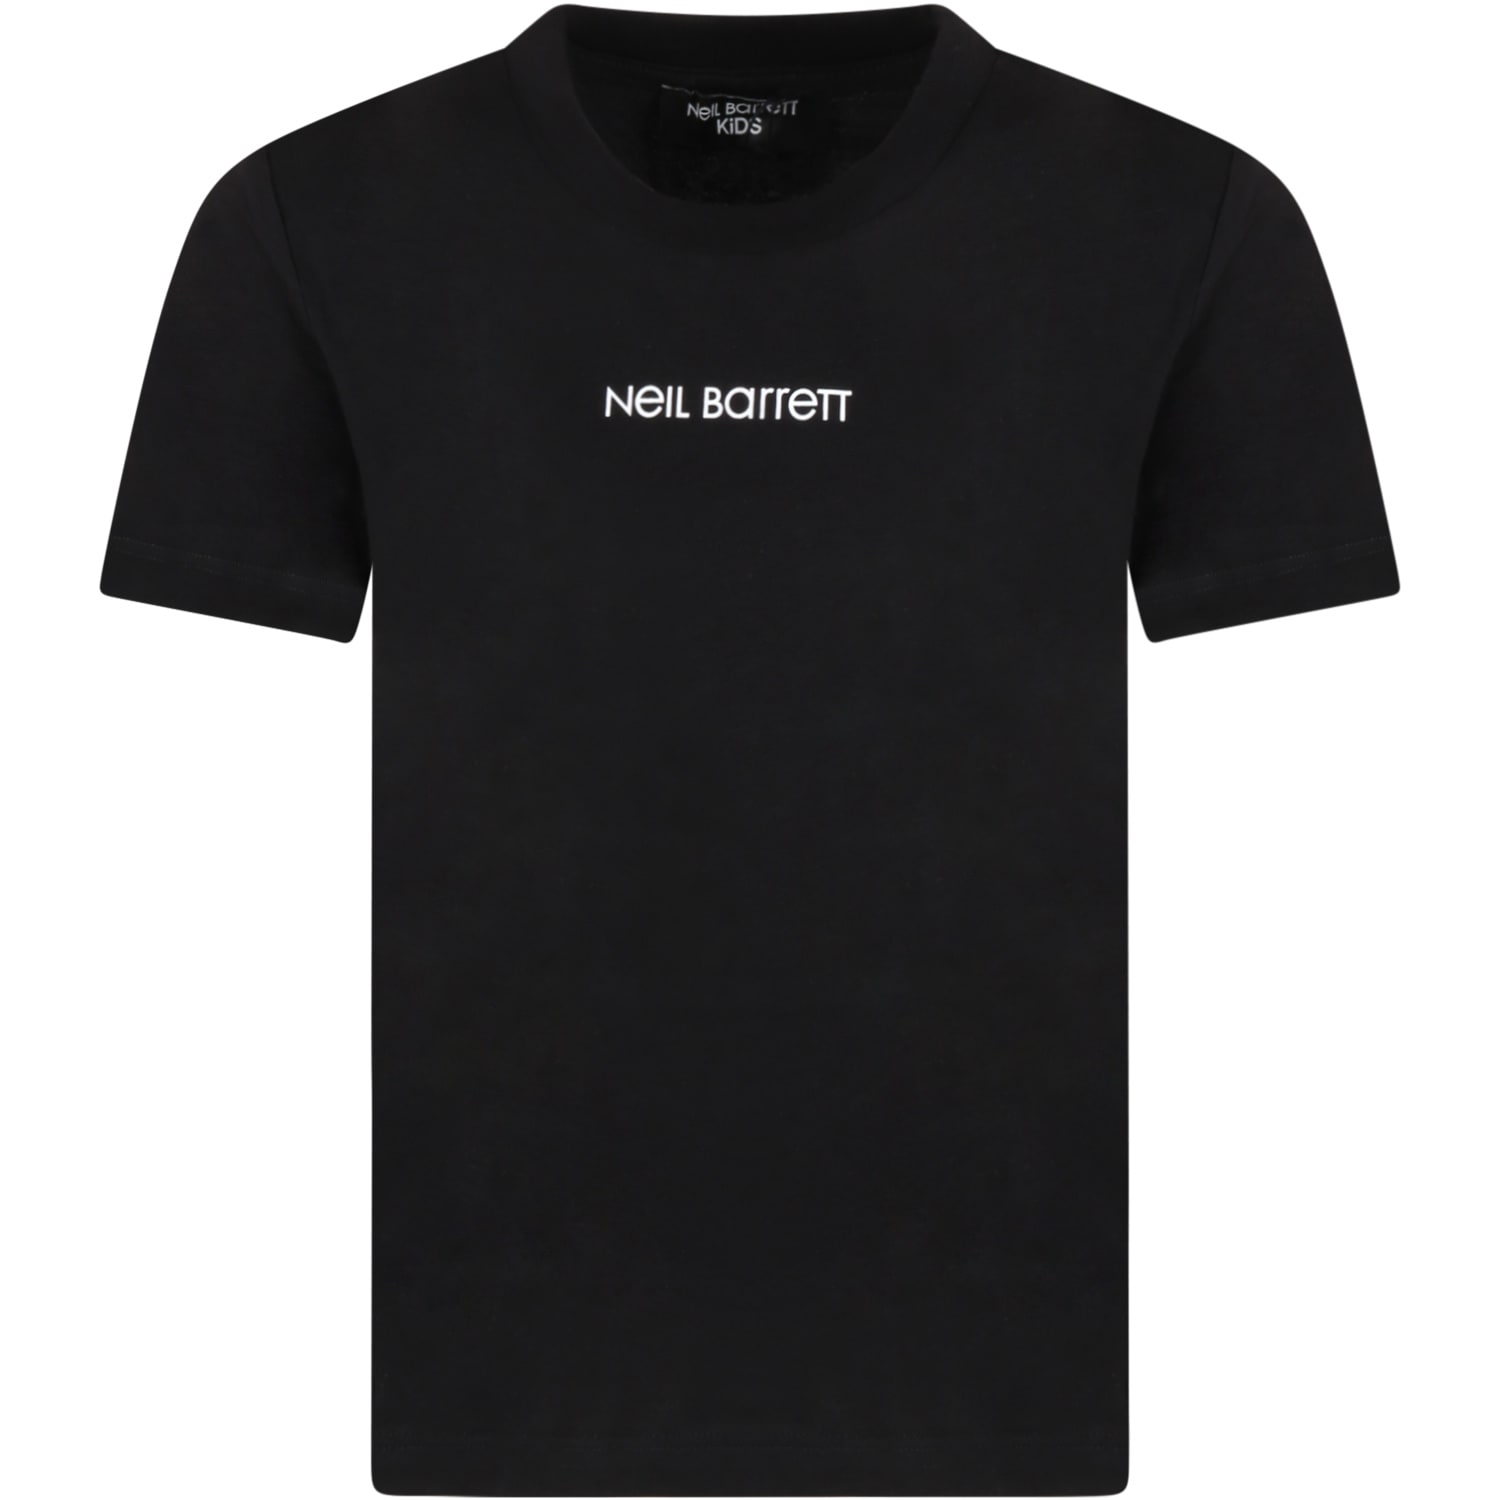 Neil Barrett Black T-shirt For Boy With Logo